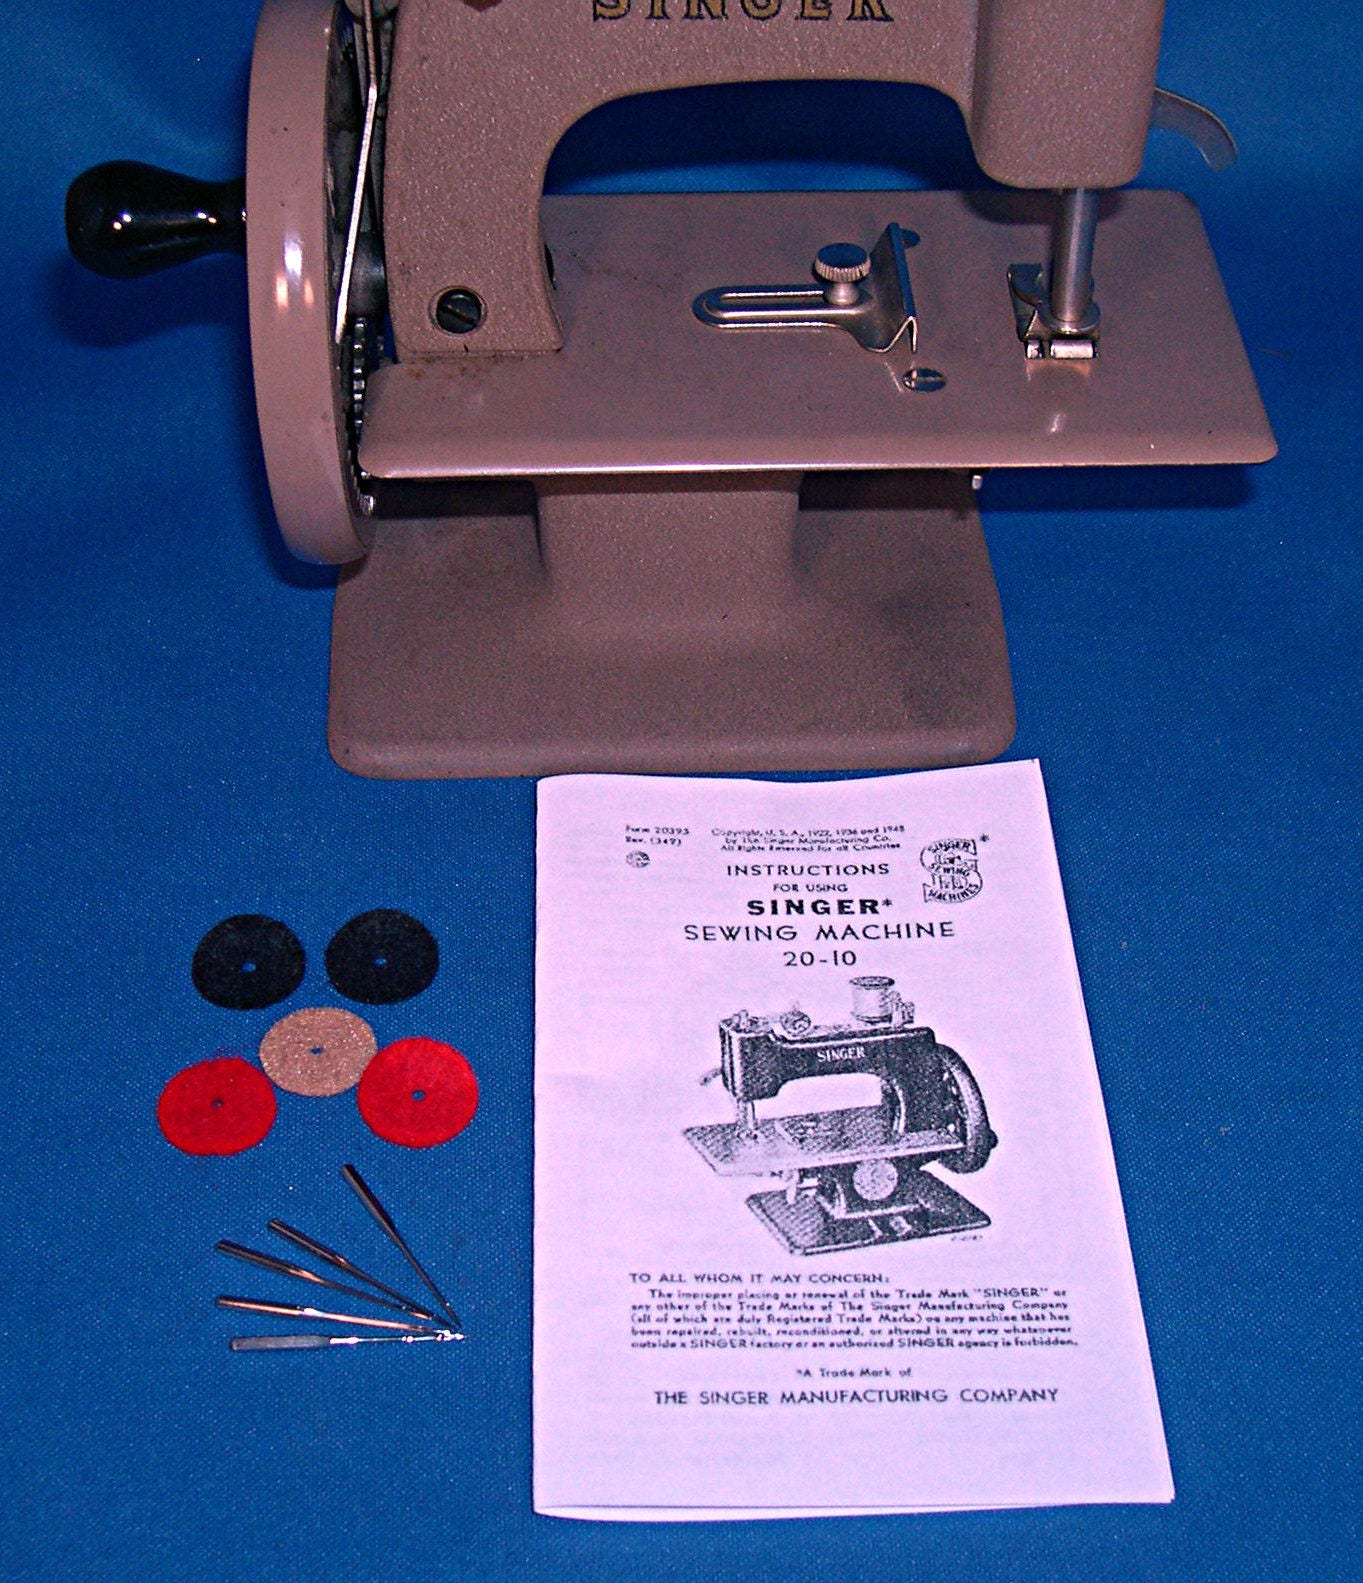 Singer Red Band Type 2020 80/11 Sewing Machine Needles